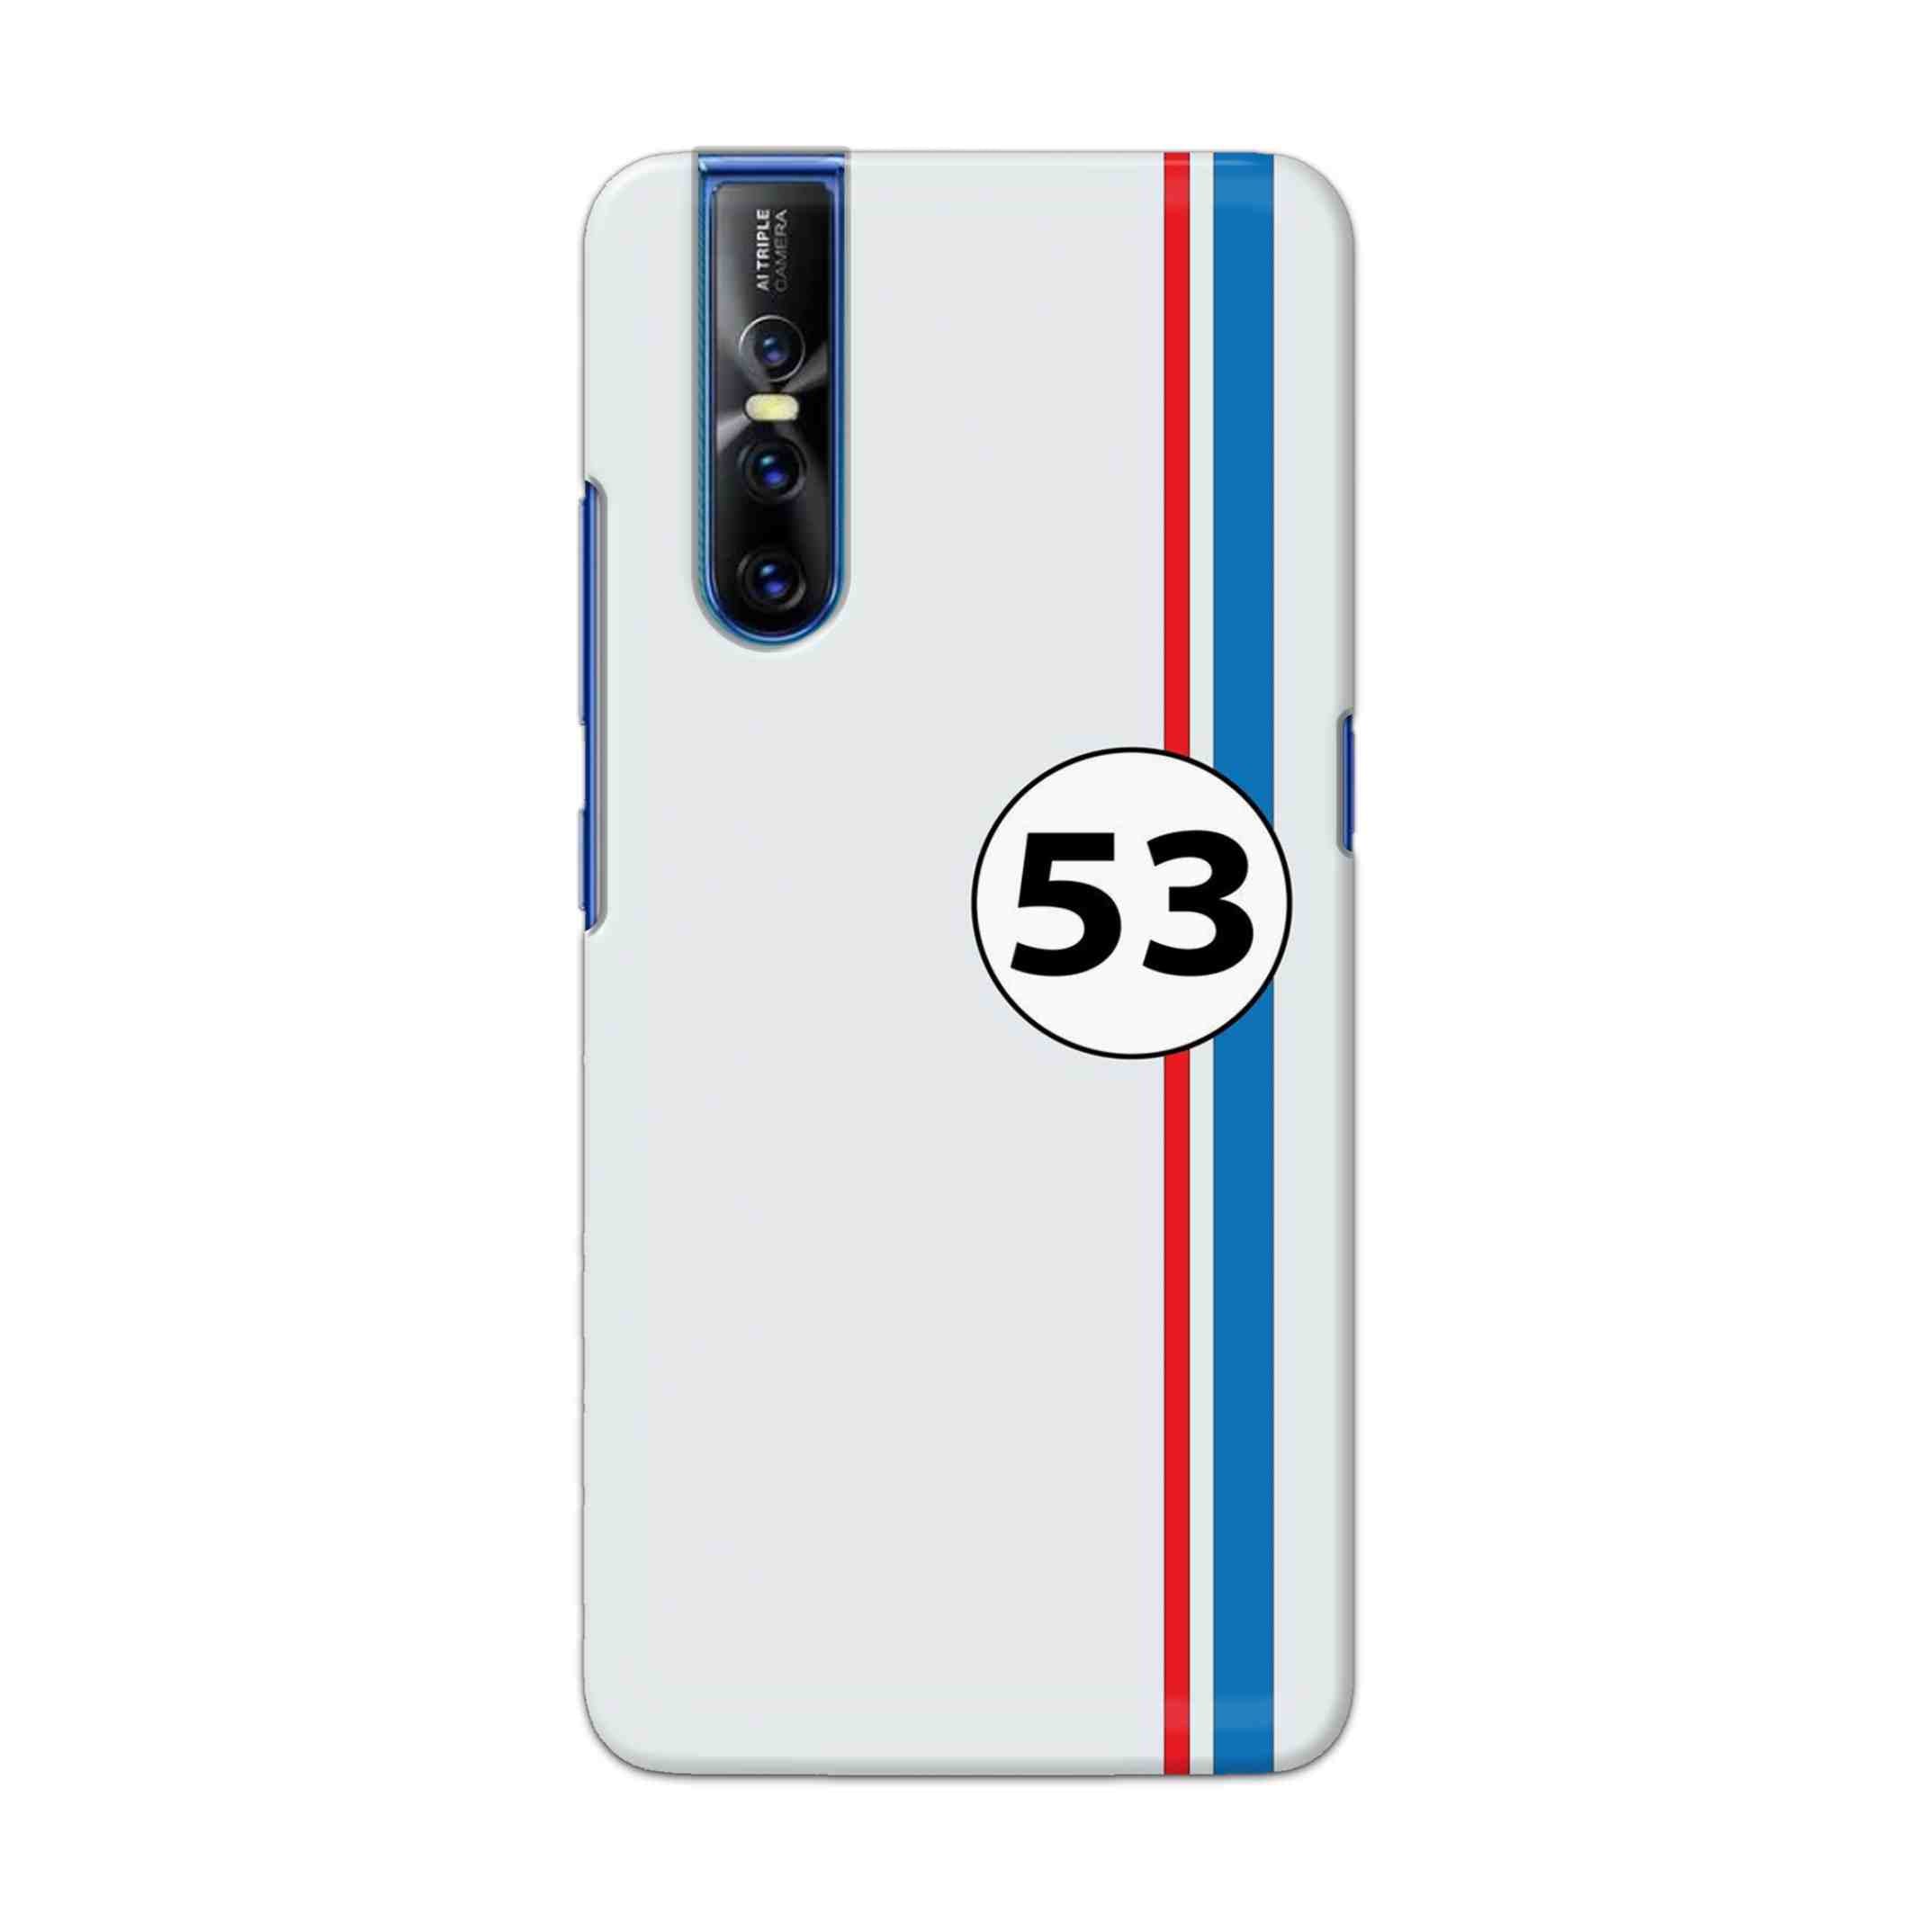 Buy 53 Hard Back Mobile Phone Case Cover For Vivo V15 Pro Online